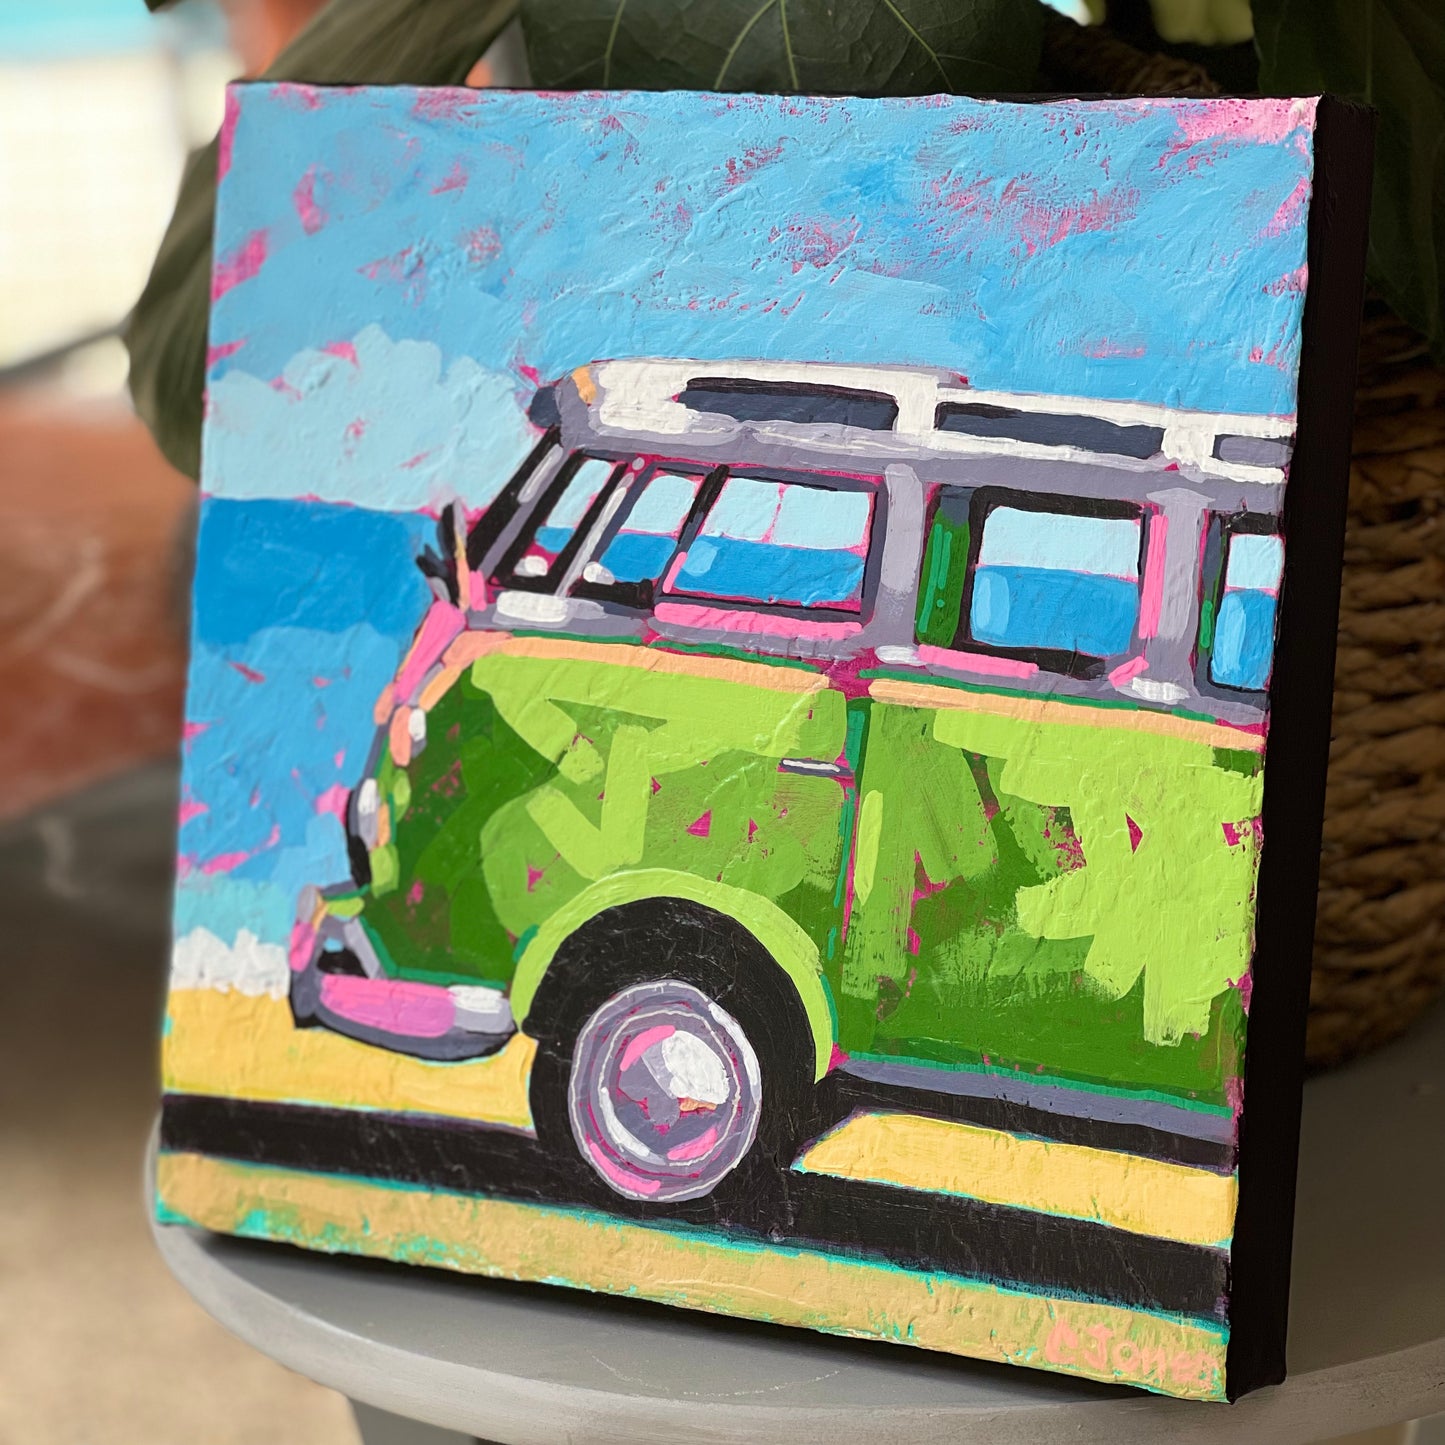 12” x 12” Textured VW Beach Van